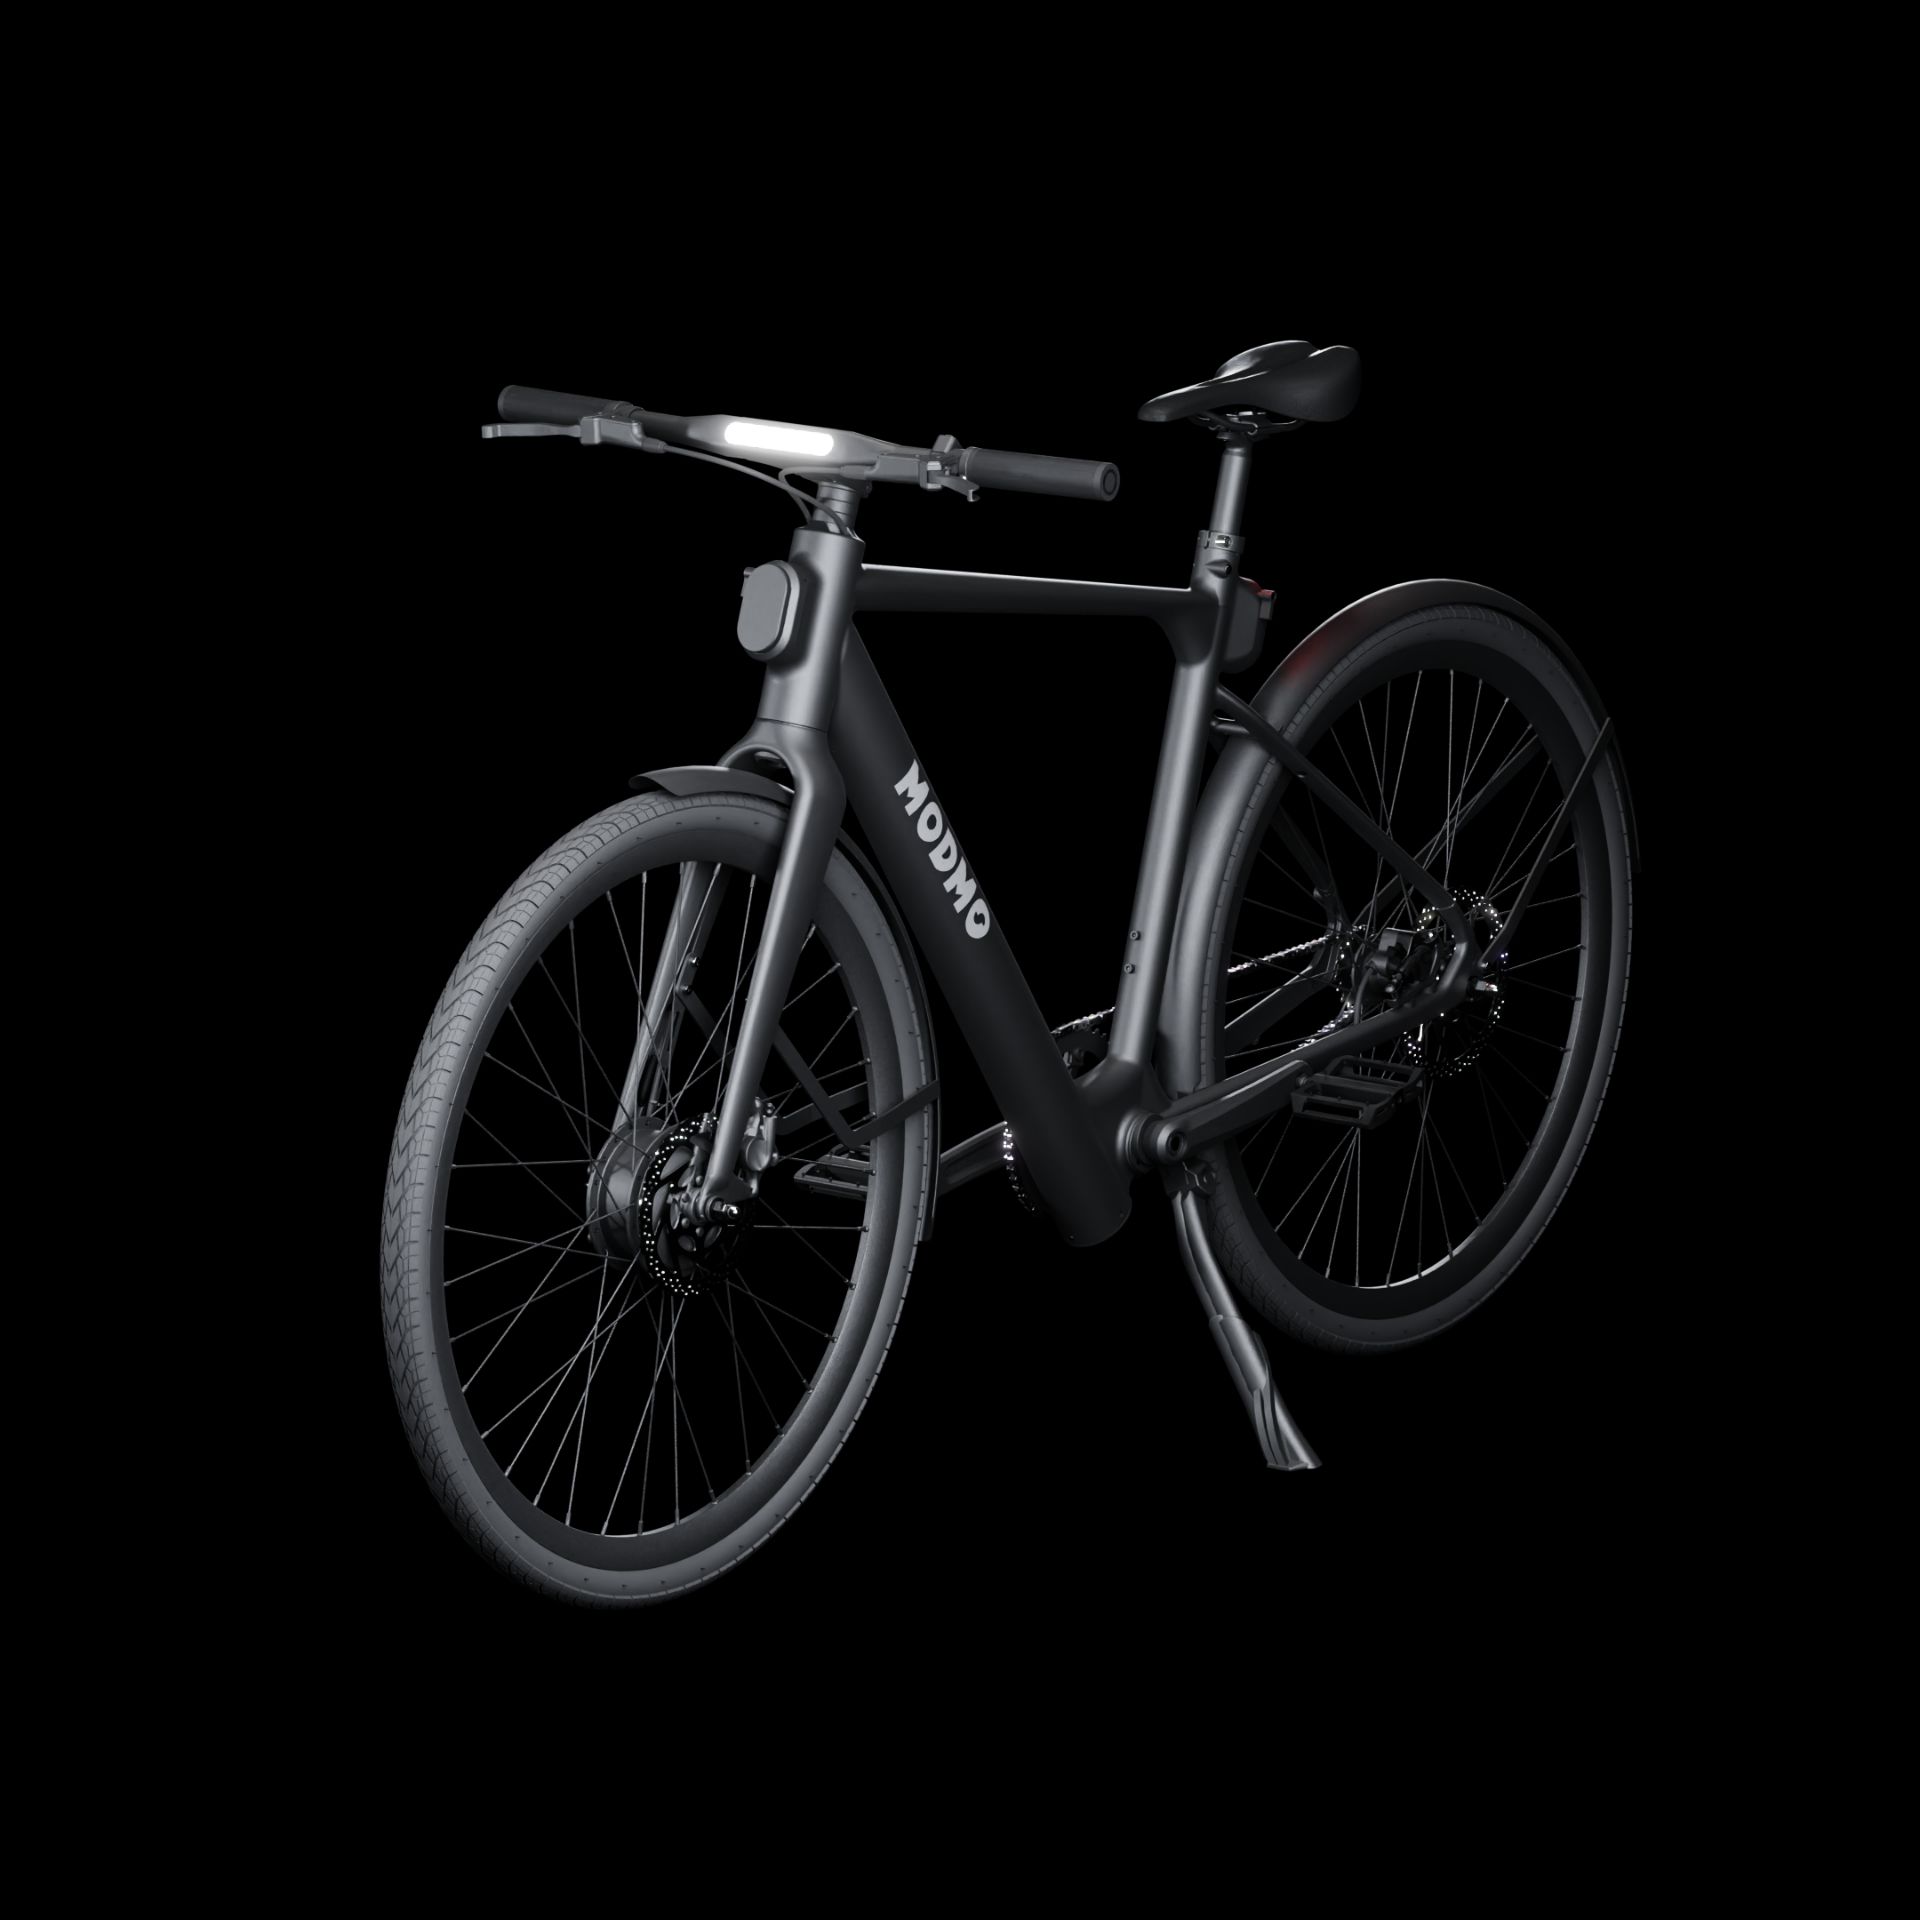 Modmo Saigon+ Electric Bicycle - RRP £2800 - Size S (Rider: 140-155cm) - Image 3 of 19